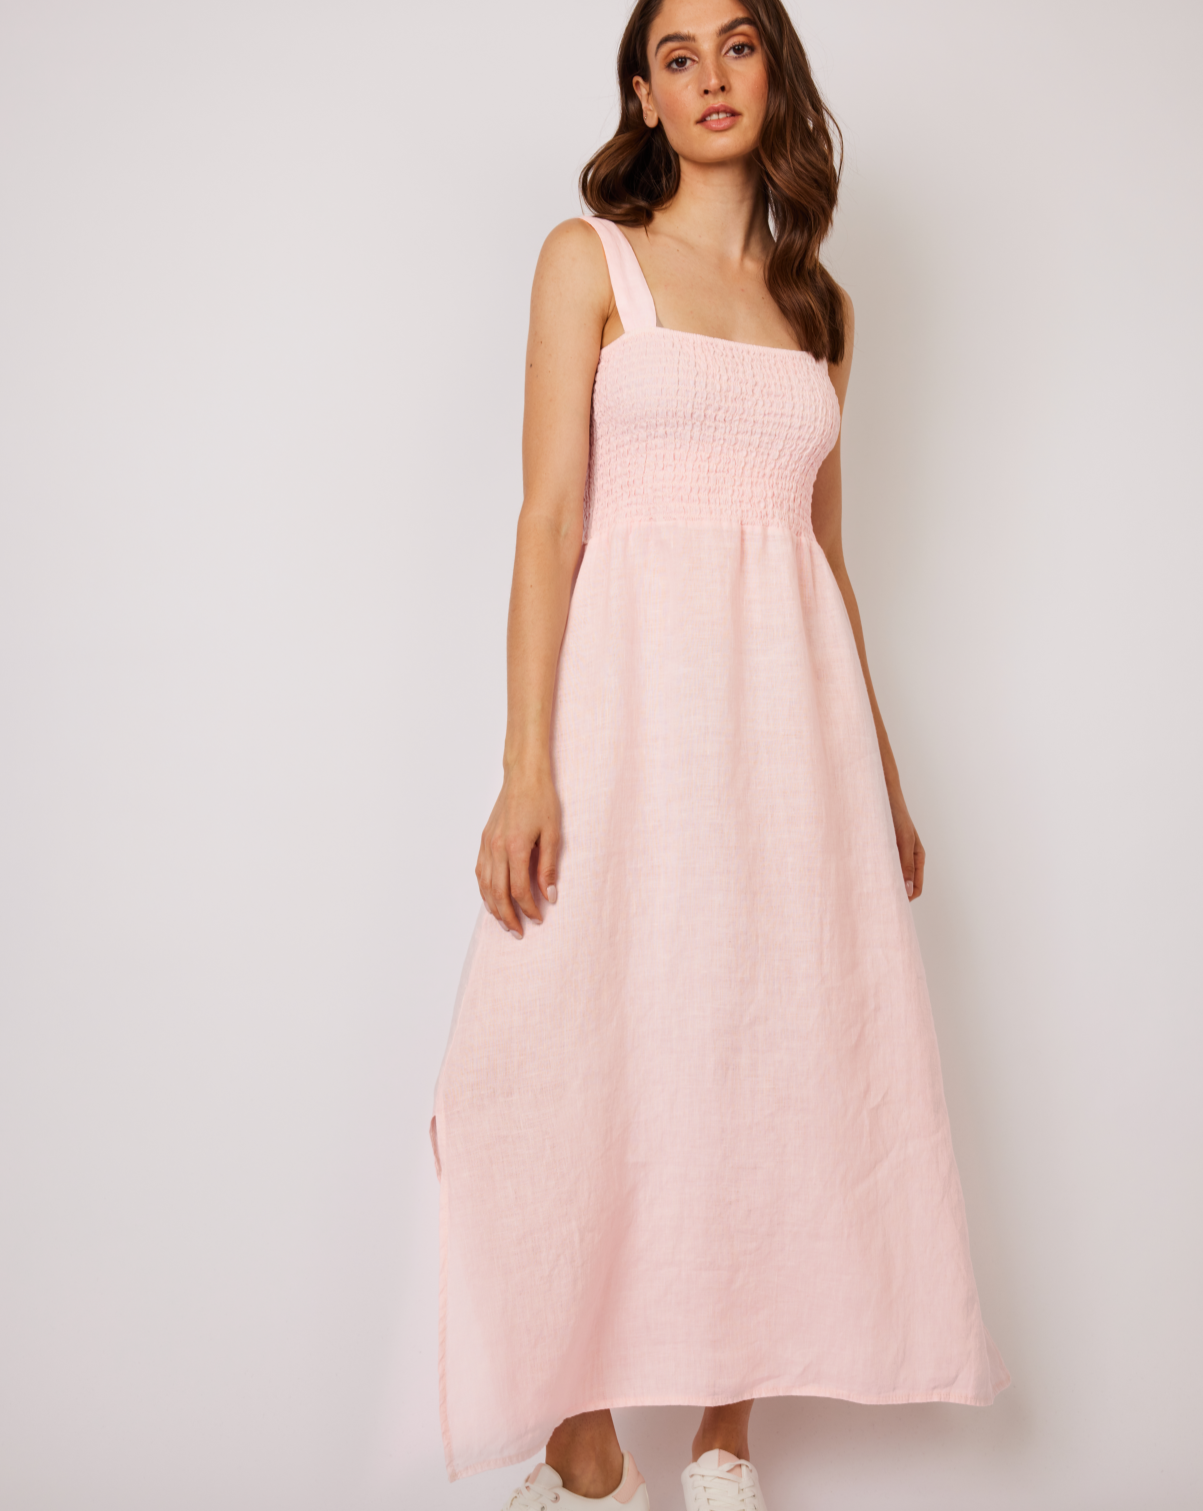 Bunched Top Linen Dress: Size S, L